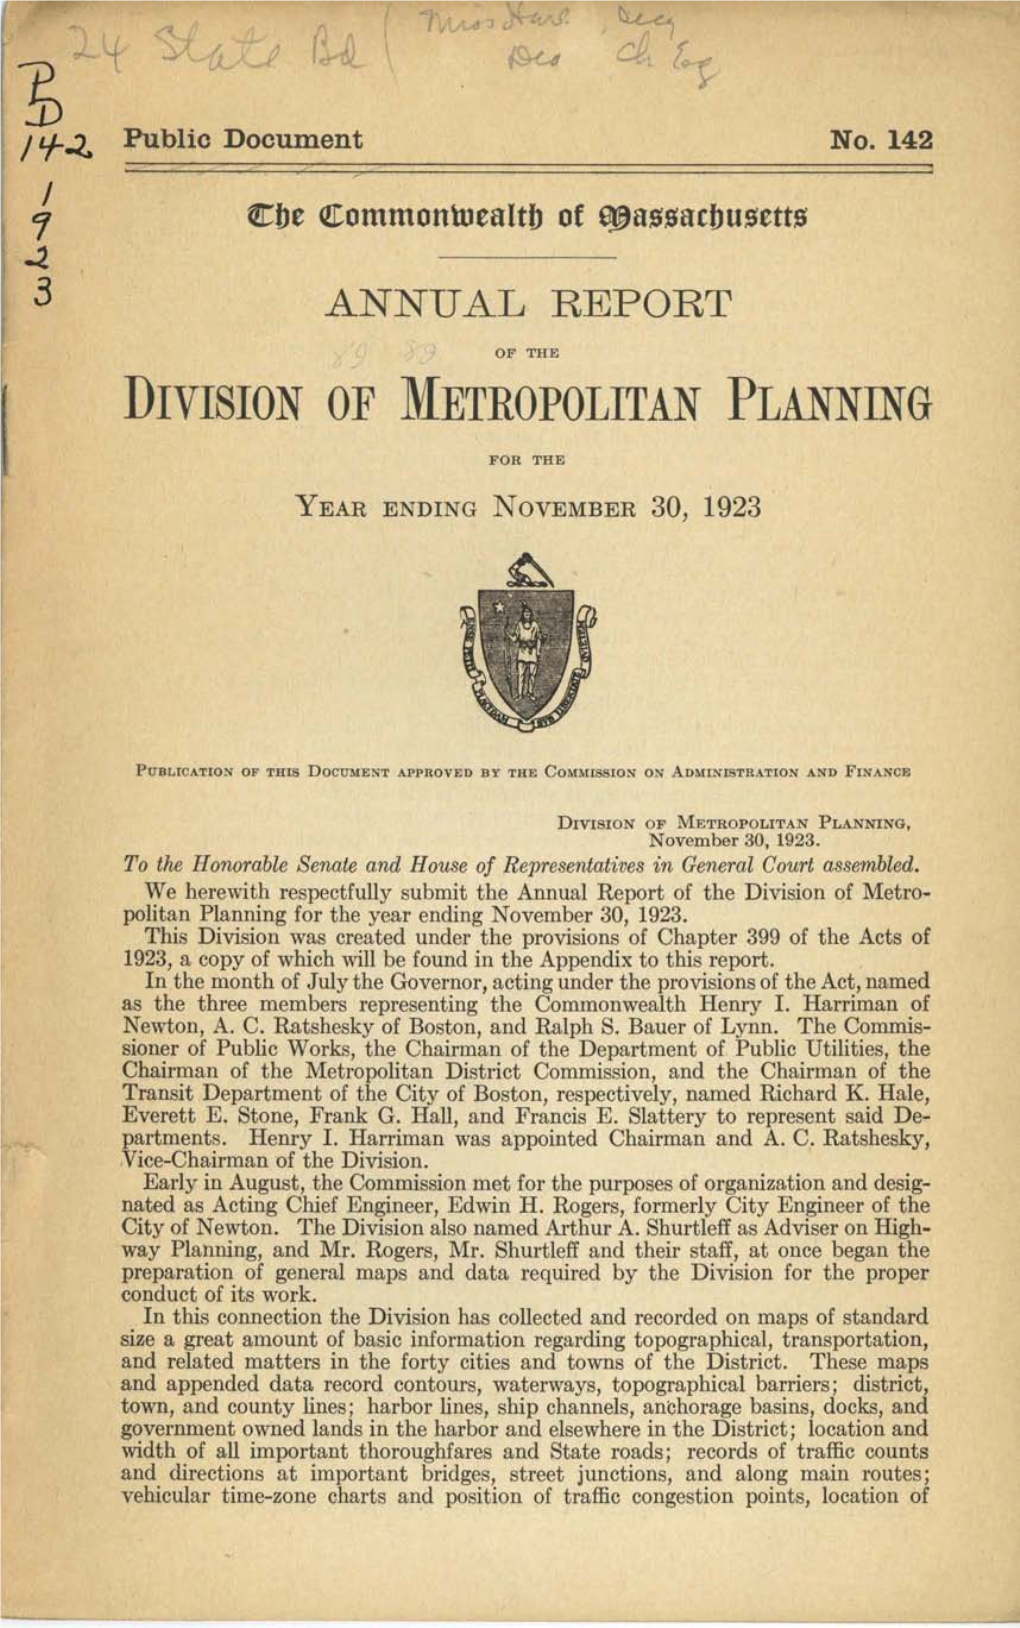 Division of Metropolitan Planning I for the Year Ending November 30, 1923